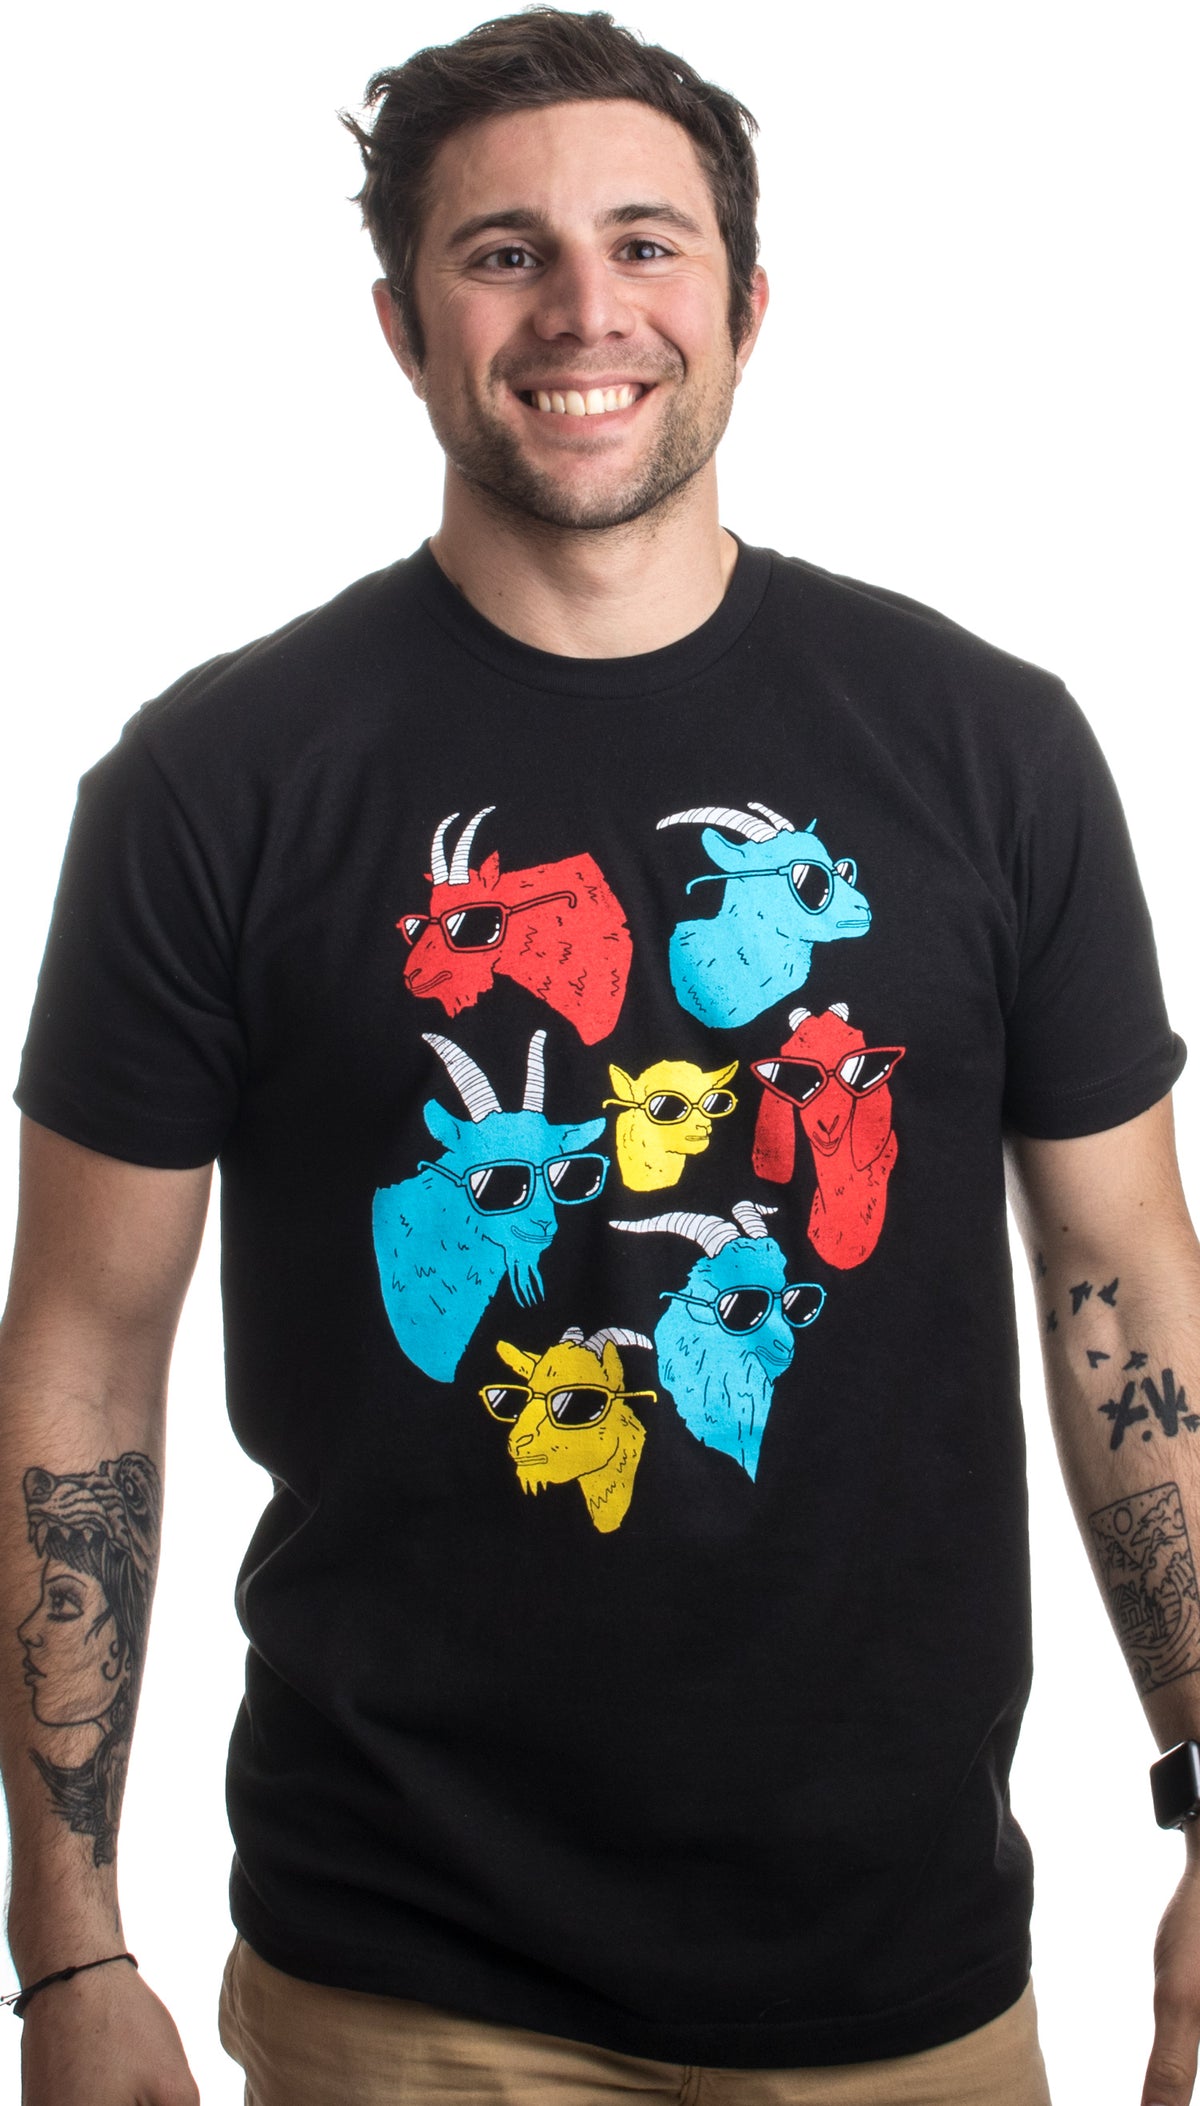 Goat Shirt | Funny Cool Farm Animal 4H Billy Pygmy Crazy for Men Women T-shirt